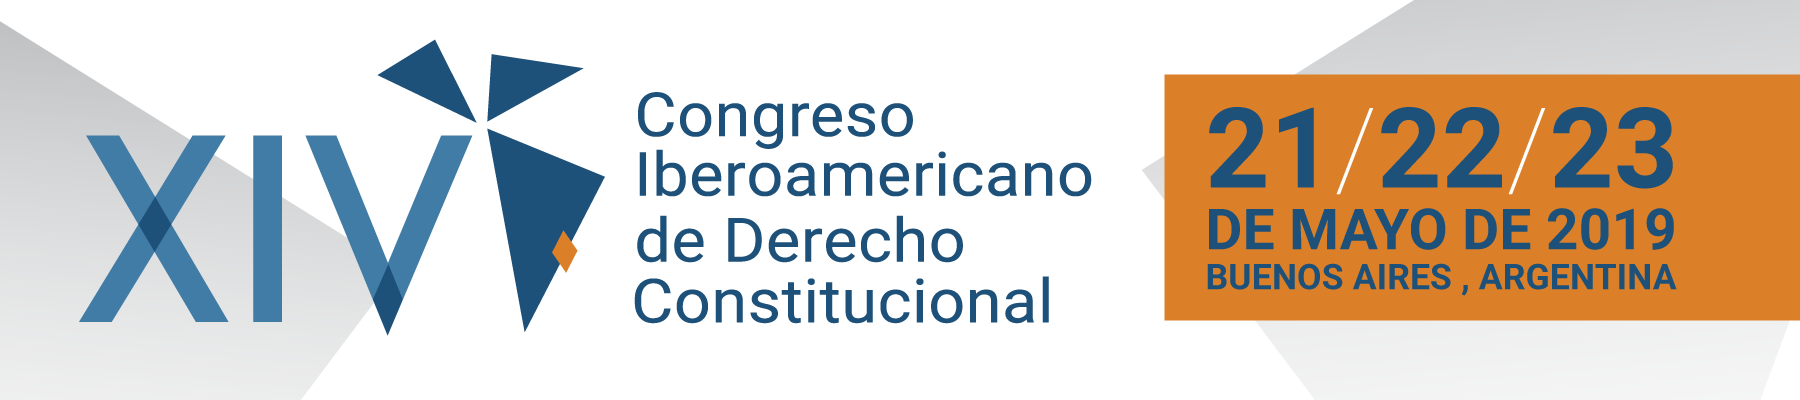 XIV CONGRESO IBEROAMERICANO DE DERECHO CONSTITUCIONAL 